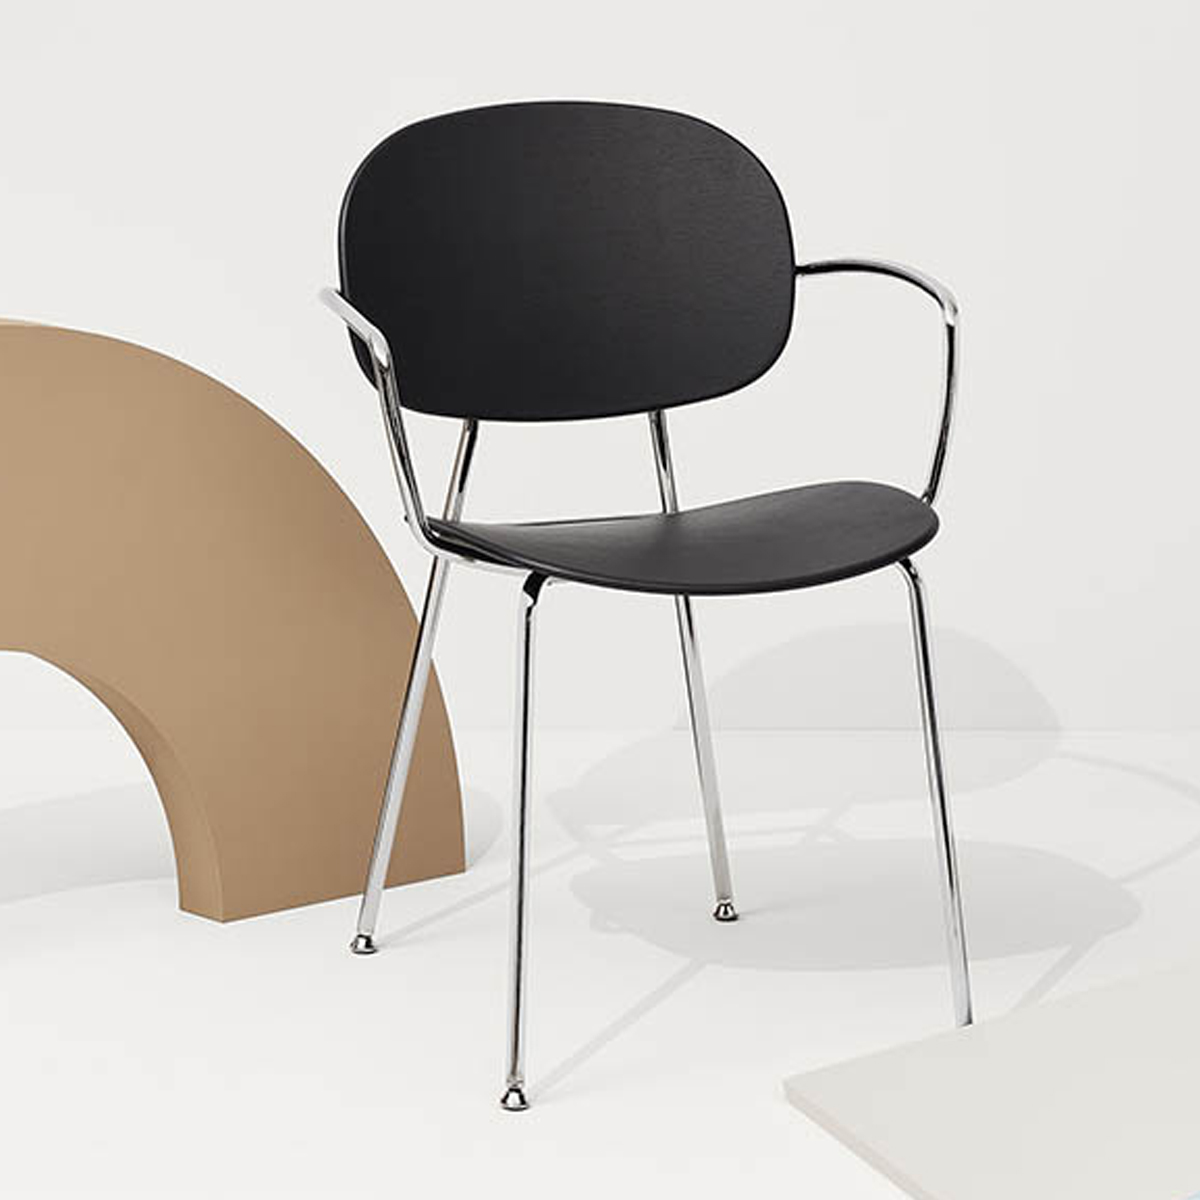 Houten design stoel